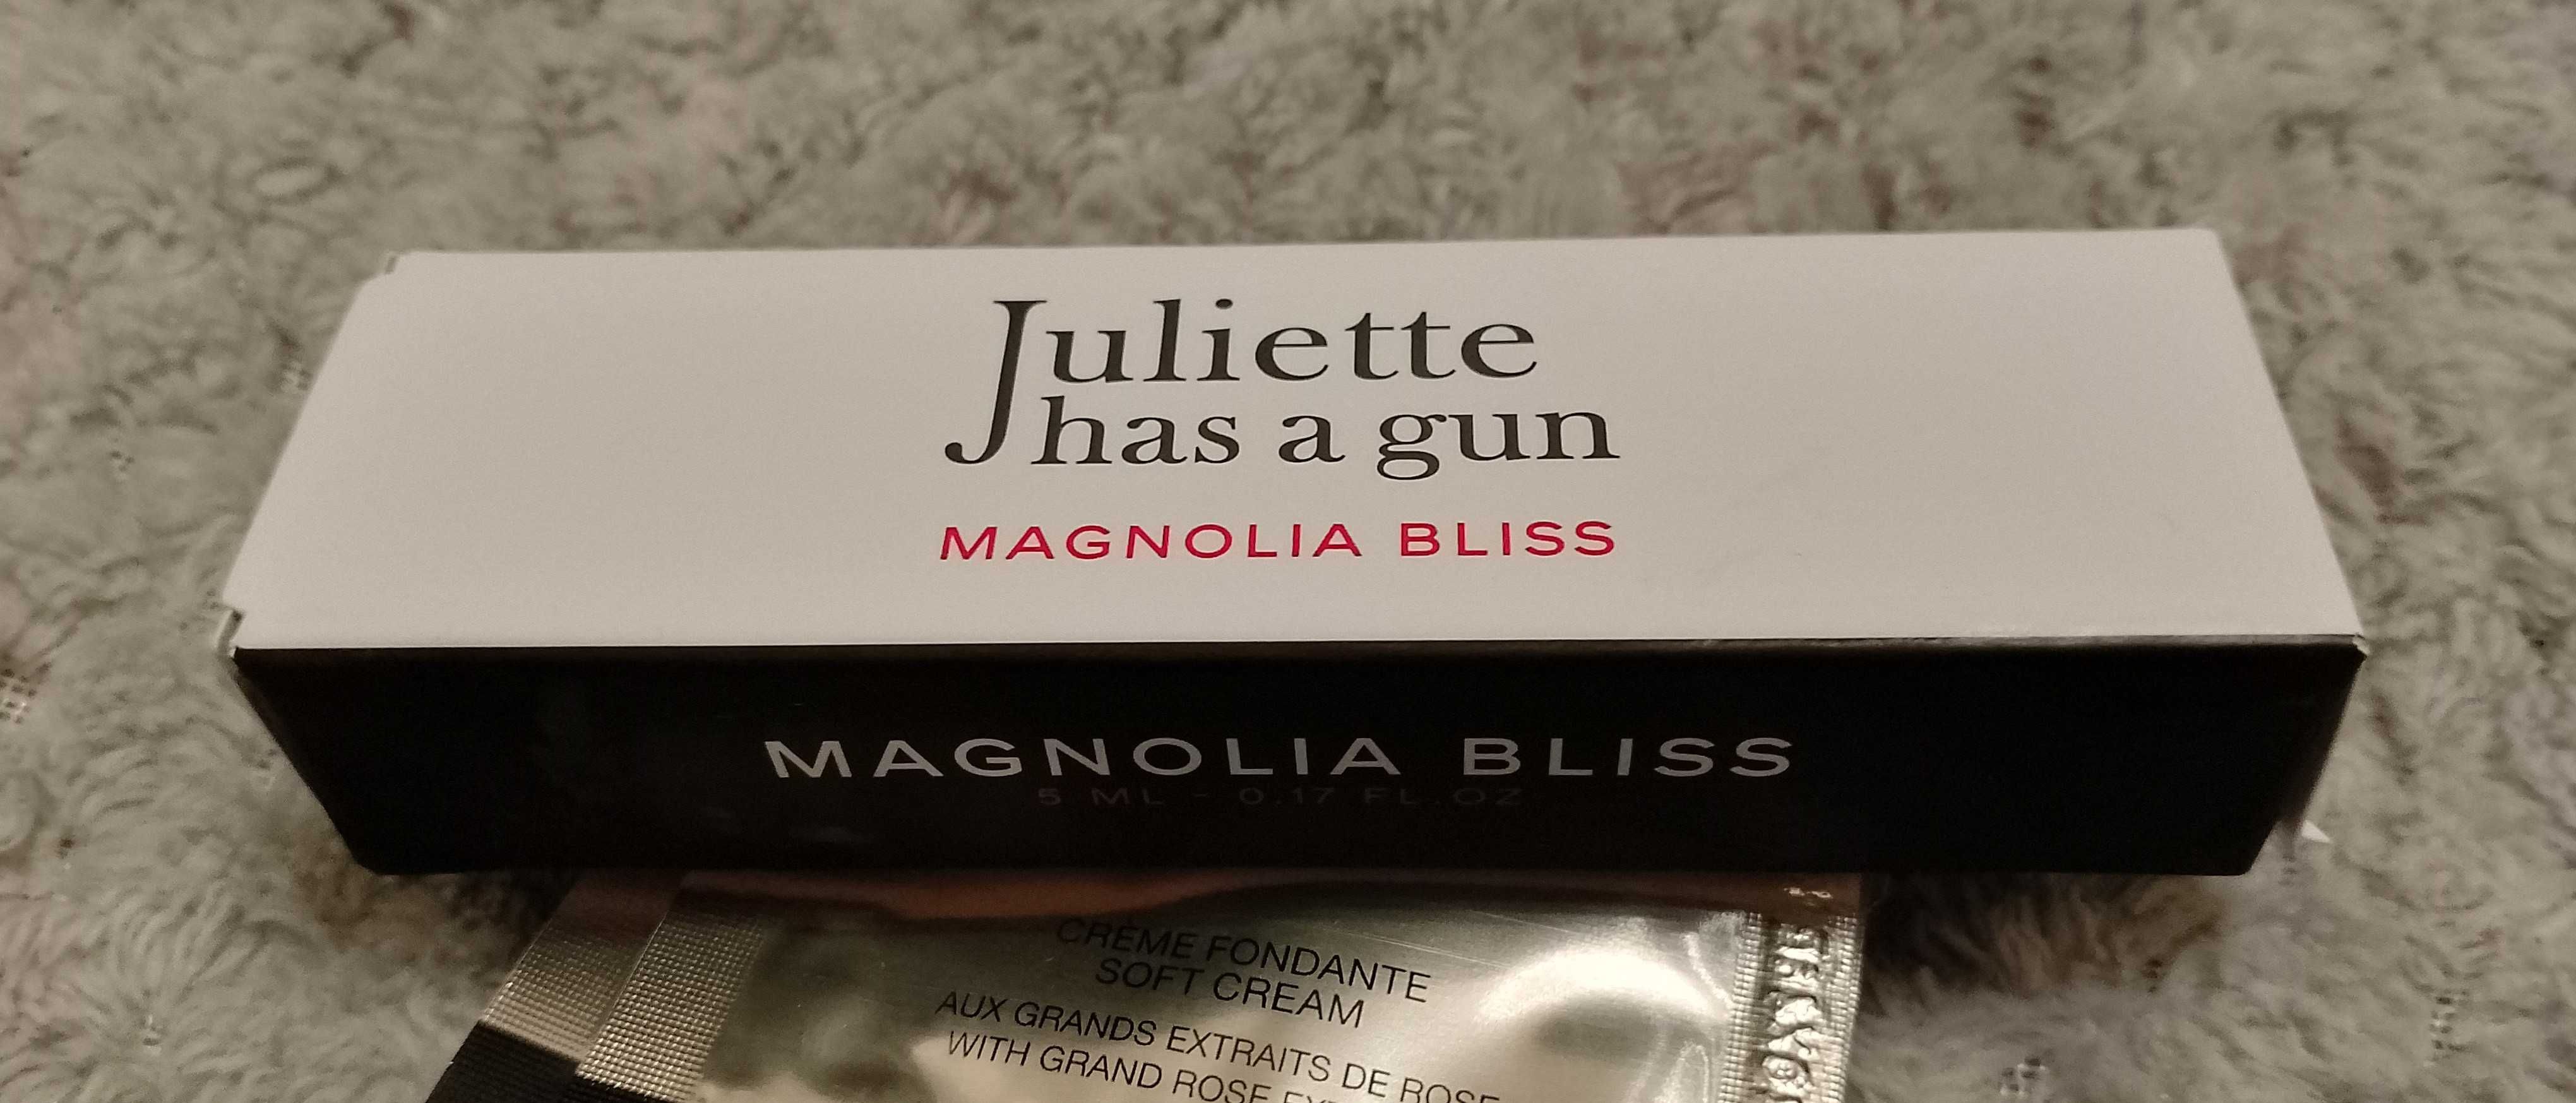 Juliette has a gun perfumy Magnolia bliss